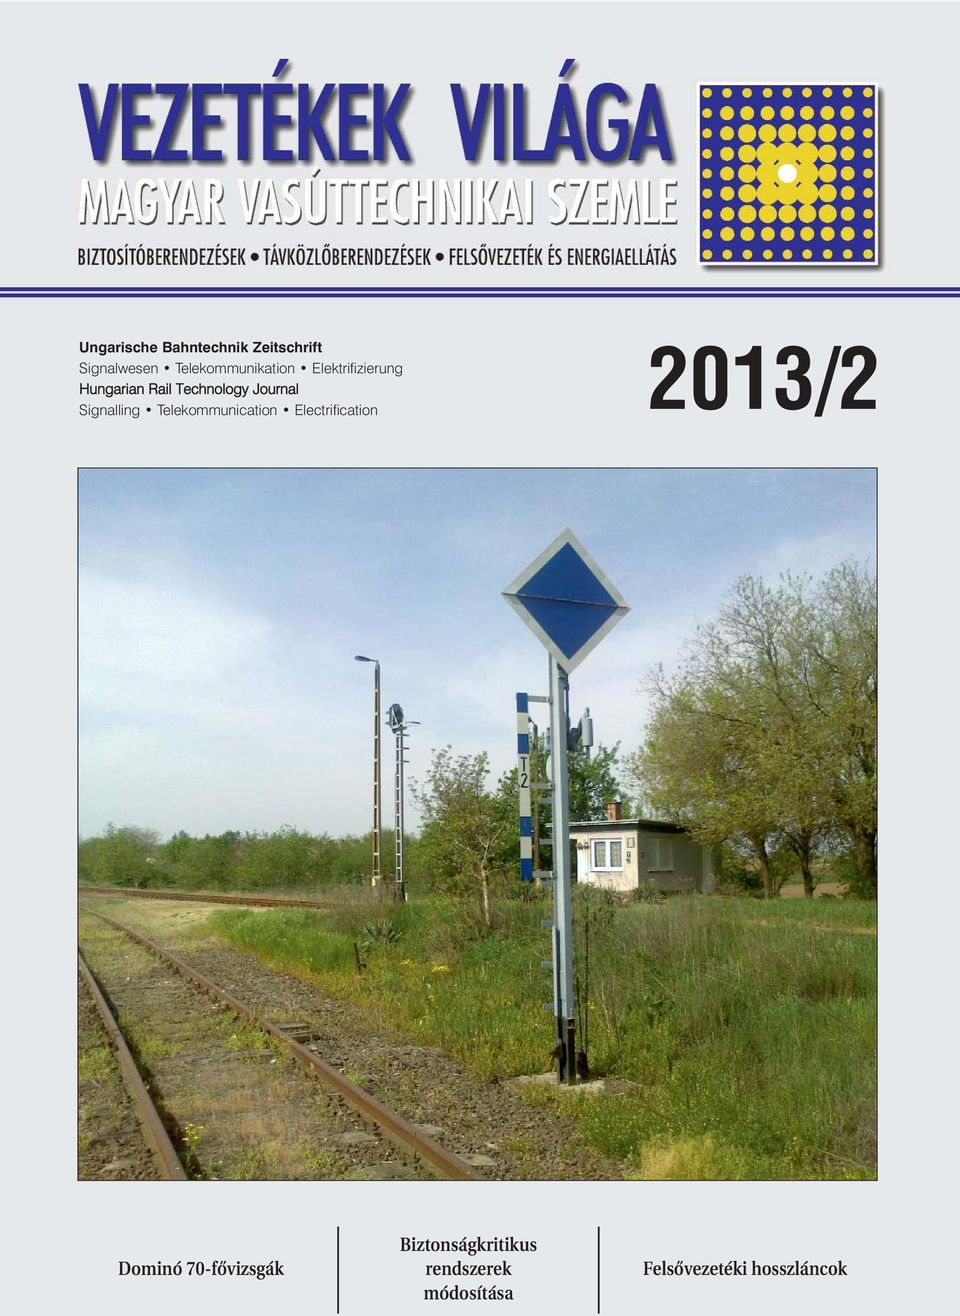 Journal Signalling Telekommunication Electrification 2013/2